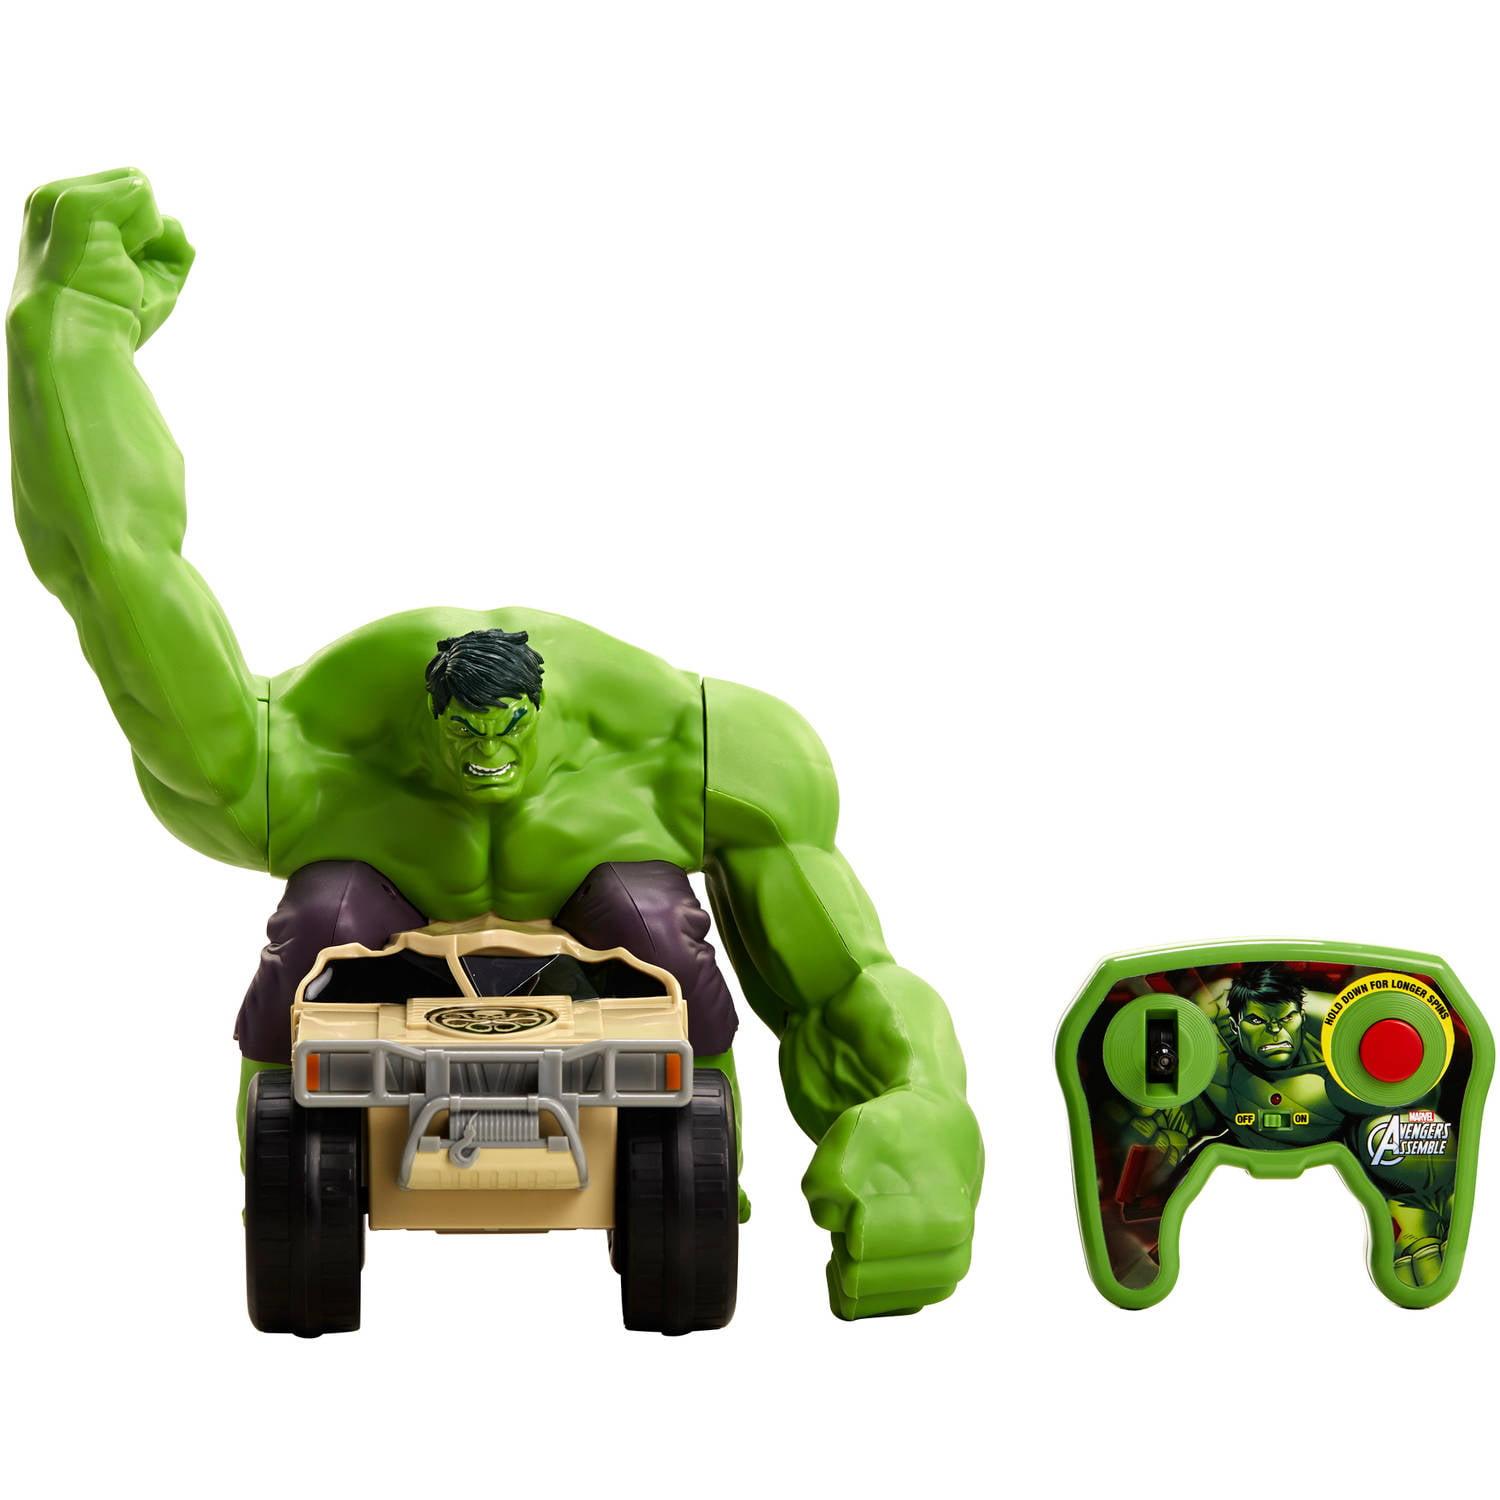 Hulk Rc Car: Best places to buy a Hulk RC car